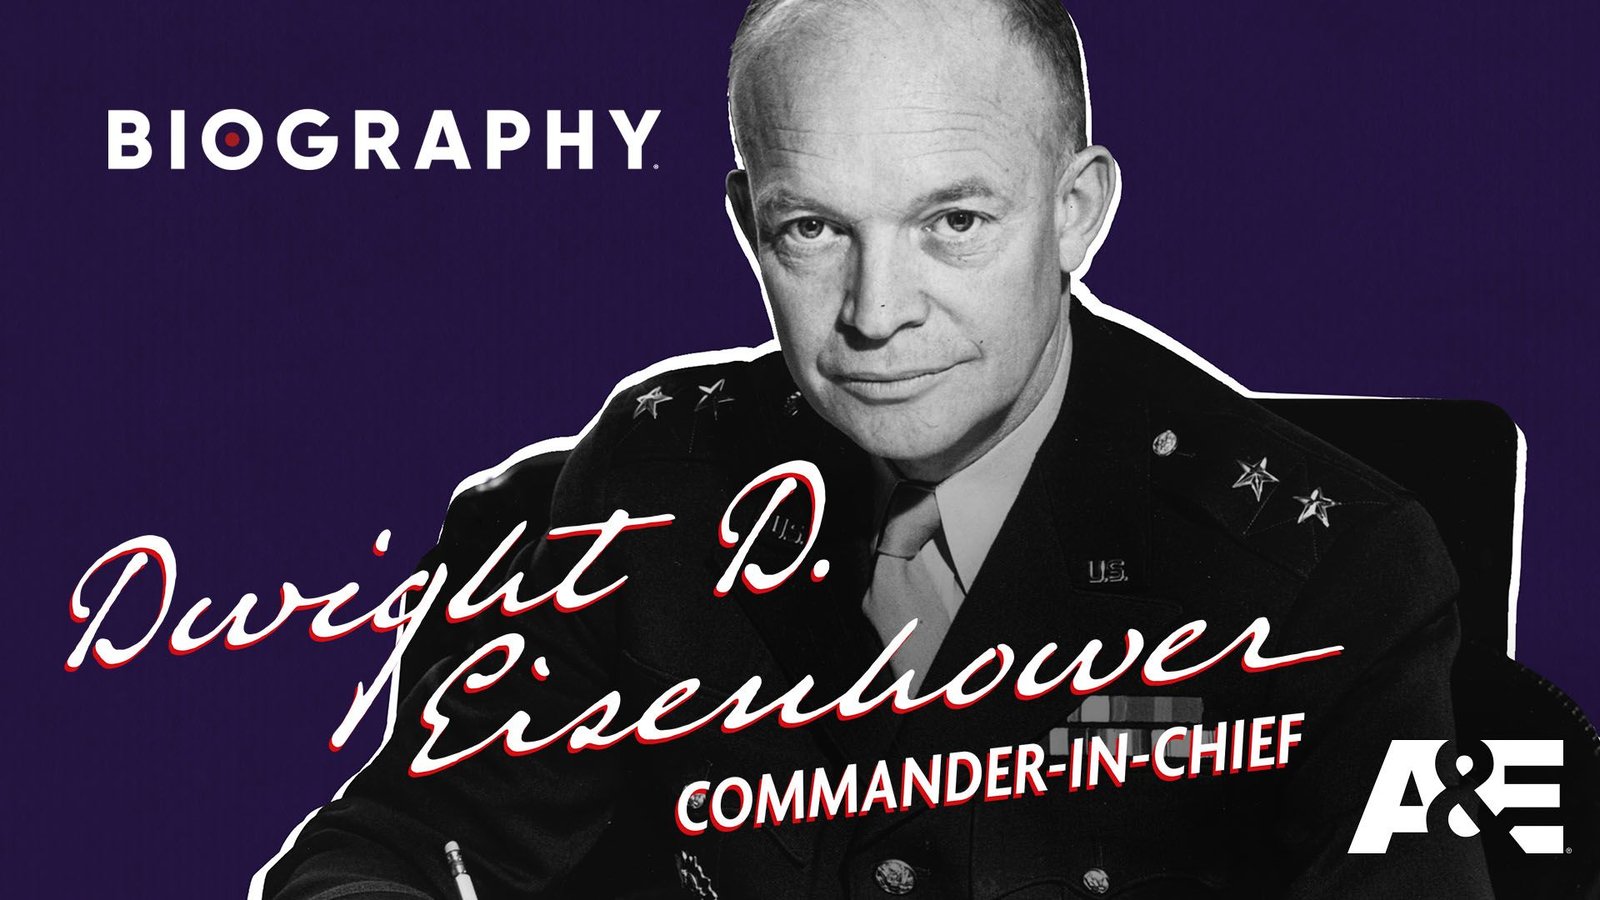 Dwight D. Eisenhower: Commander-In-Chief